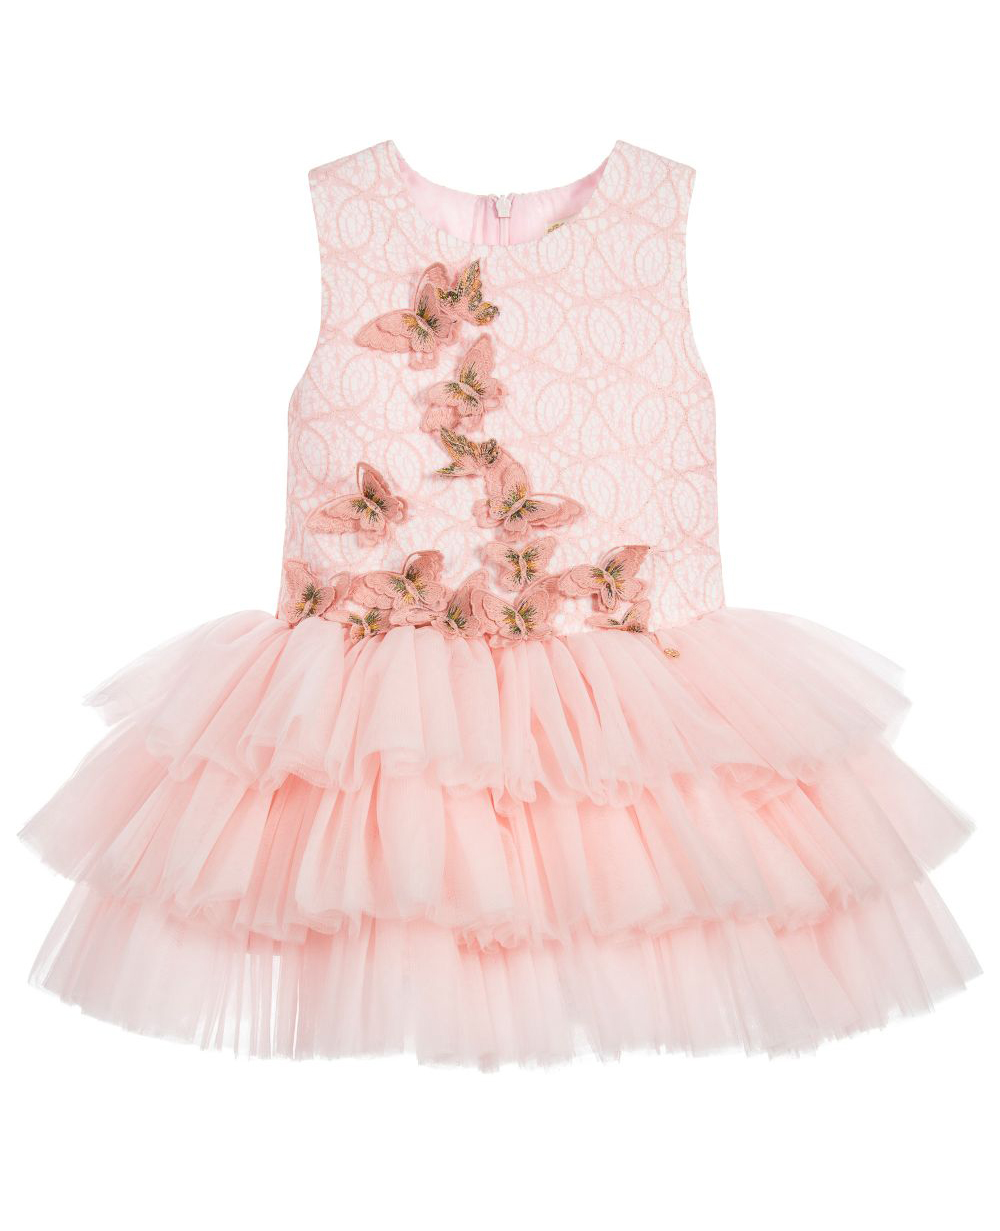 Pink Sleeveless Wedding Gown Formal Dress 